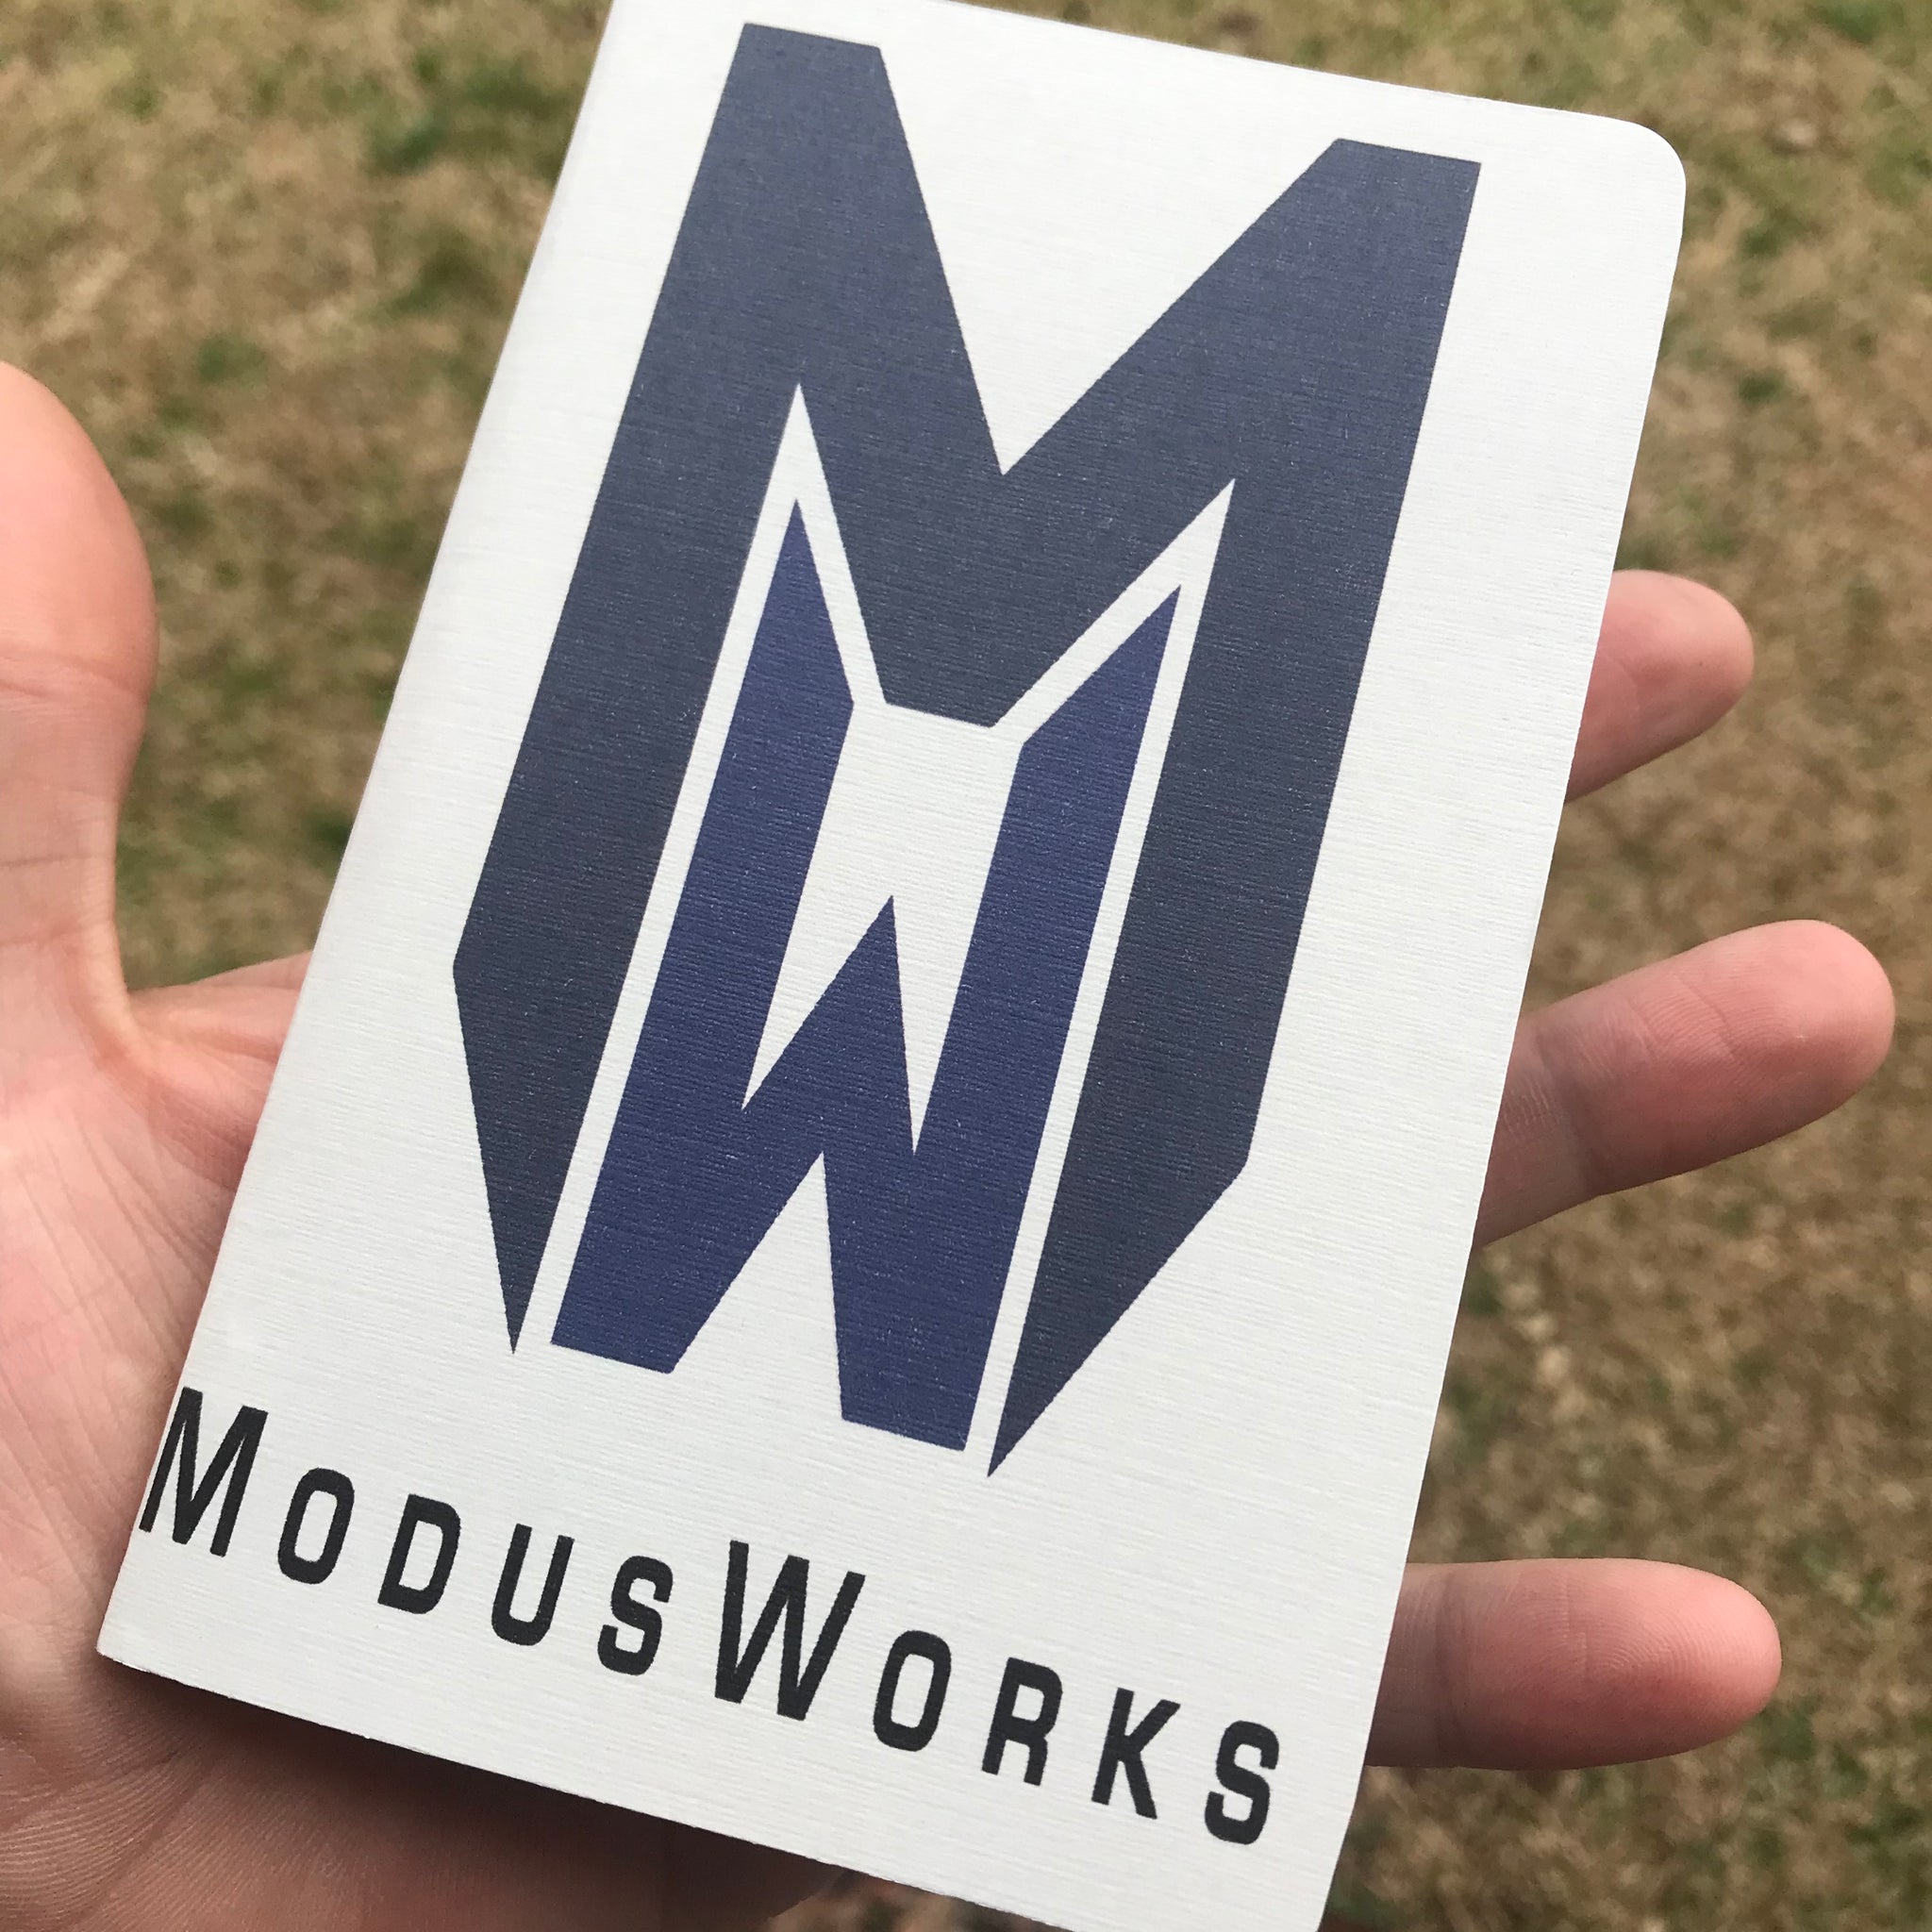 PaperStax Notebook, Modusworks Branded.